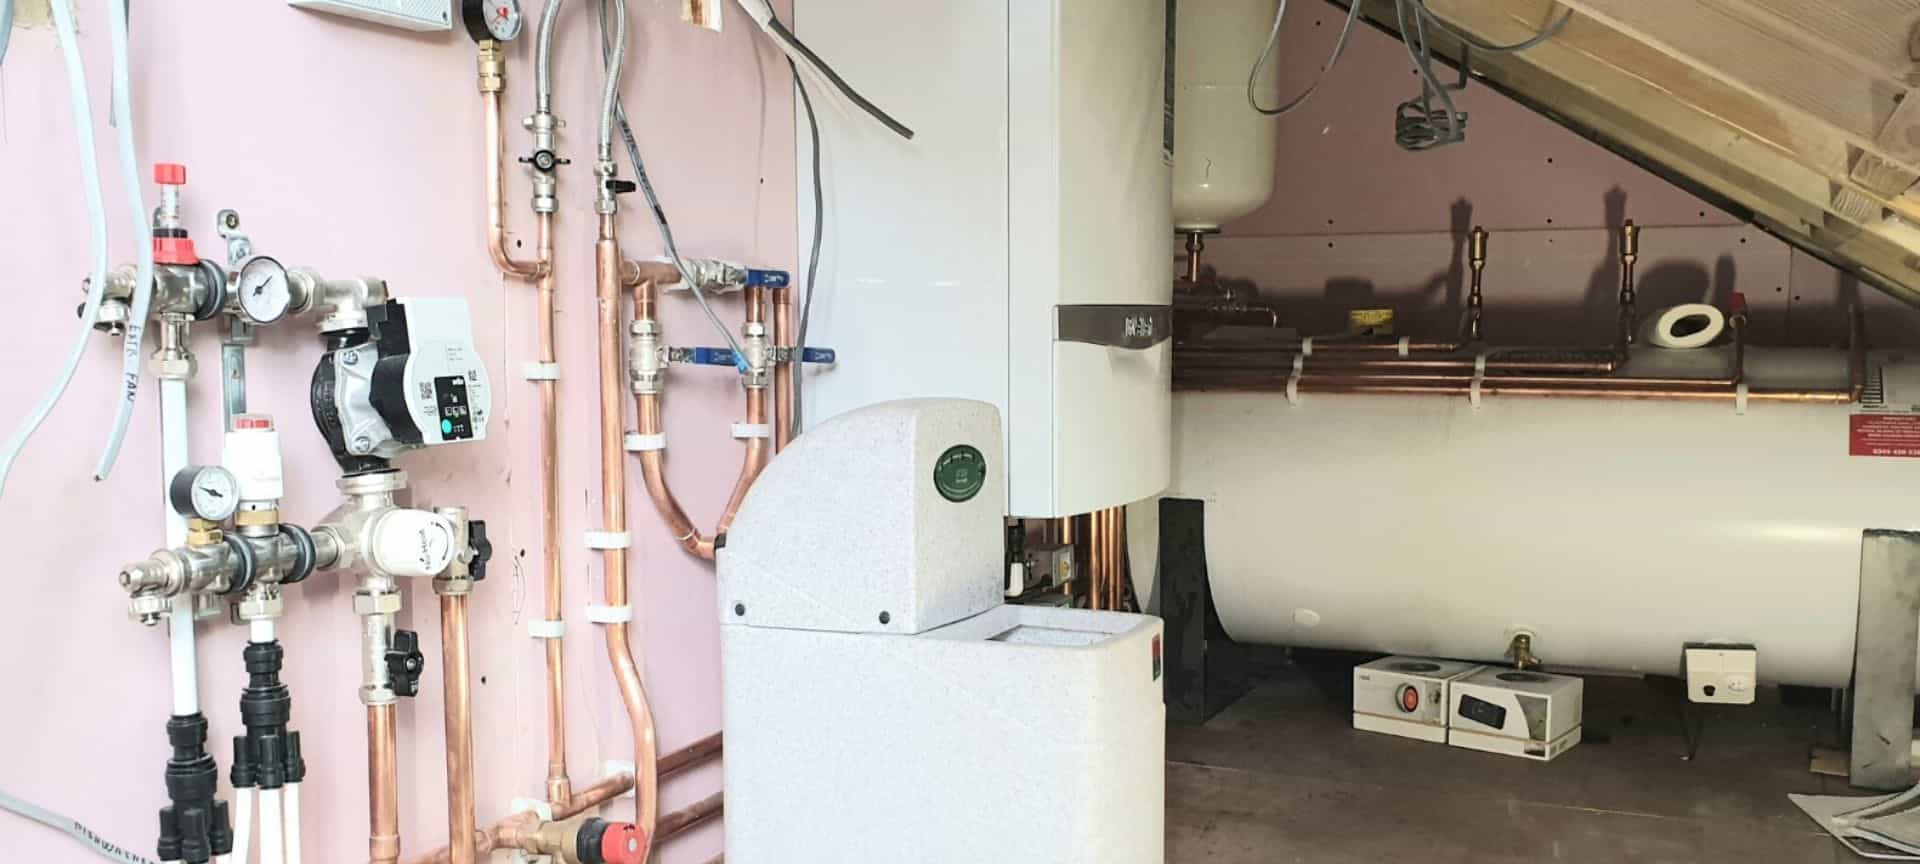 water softener and boiler in loft